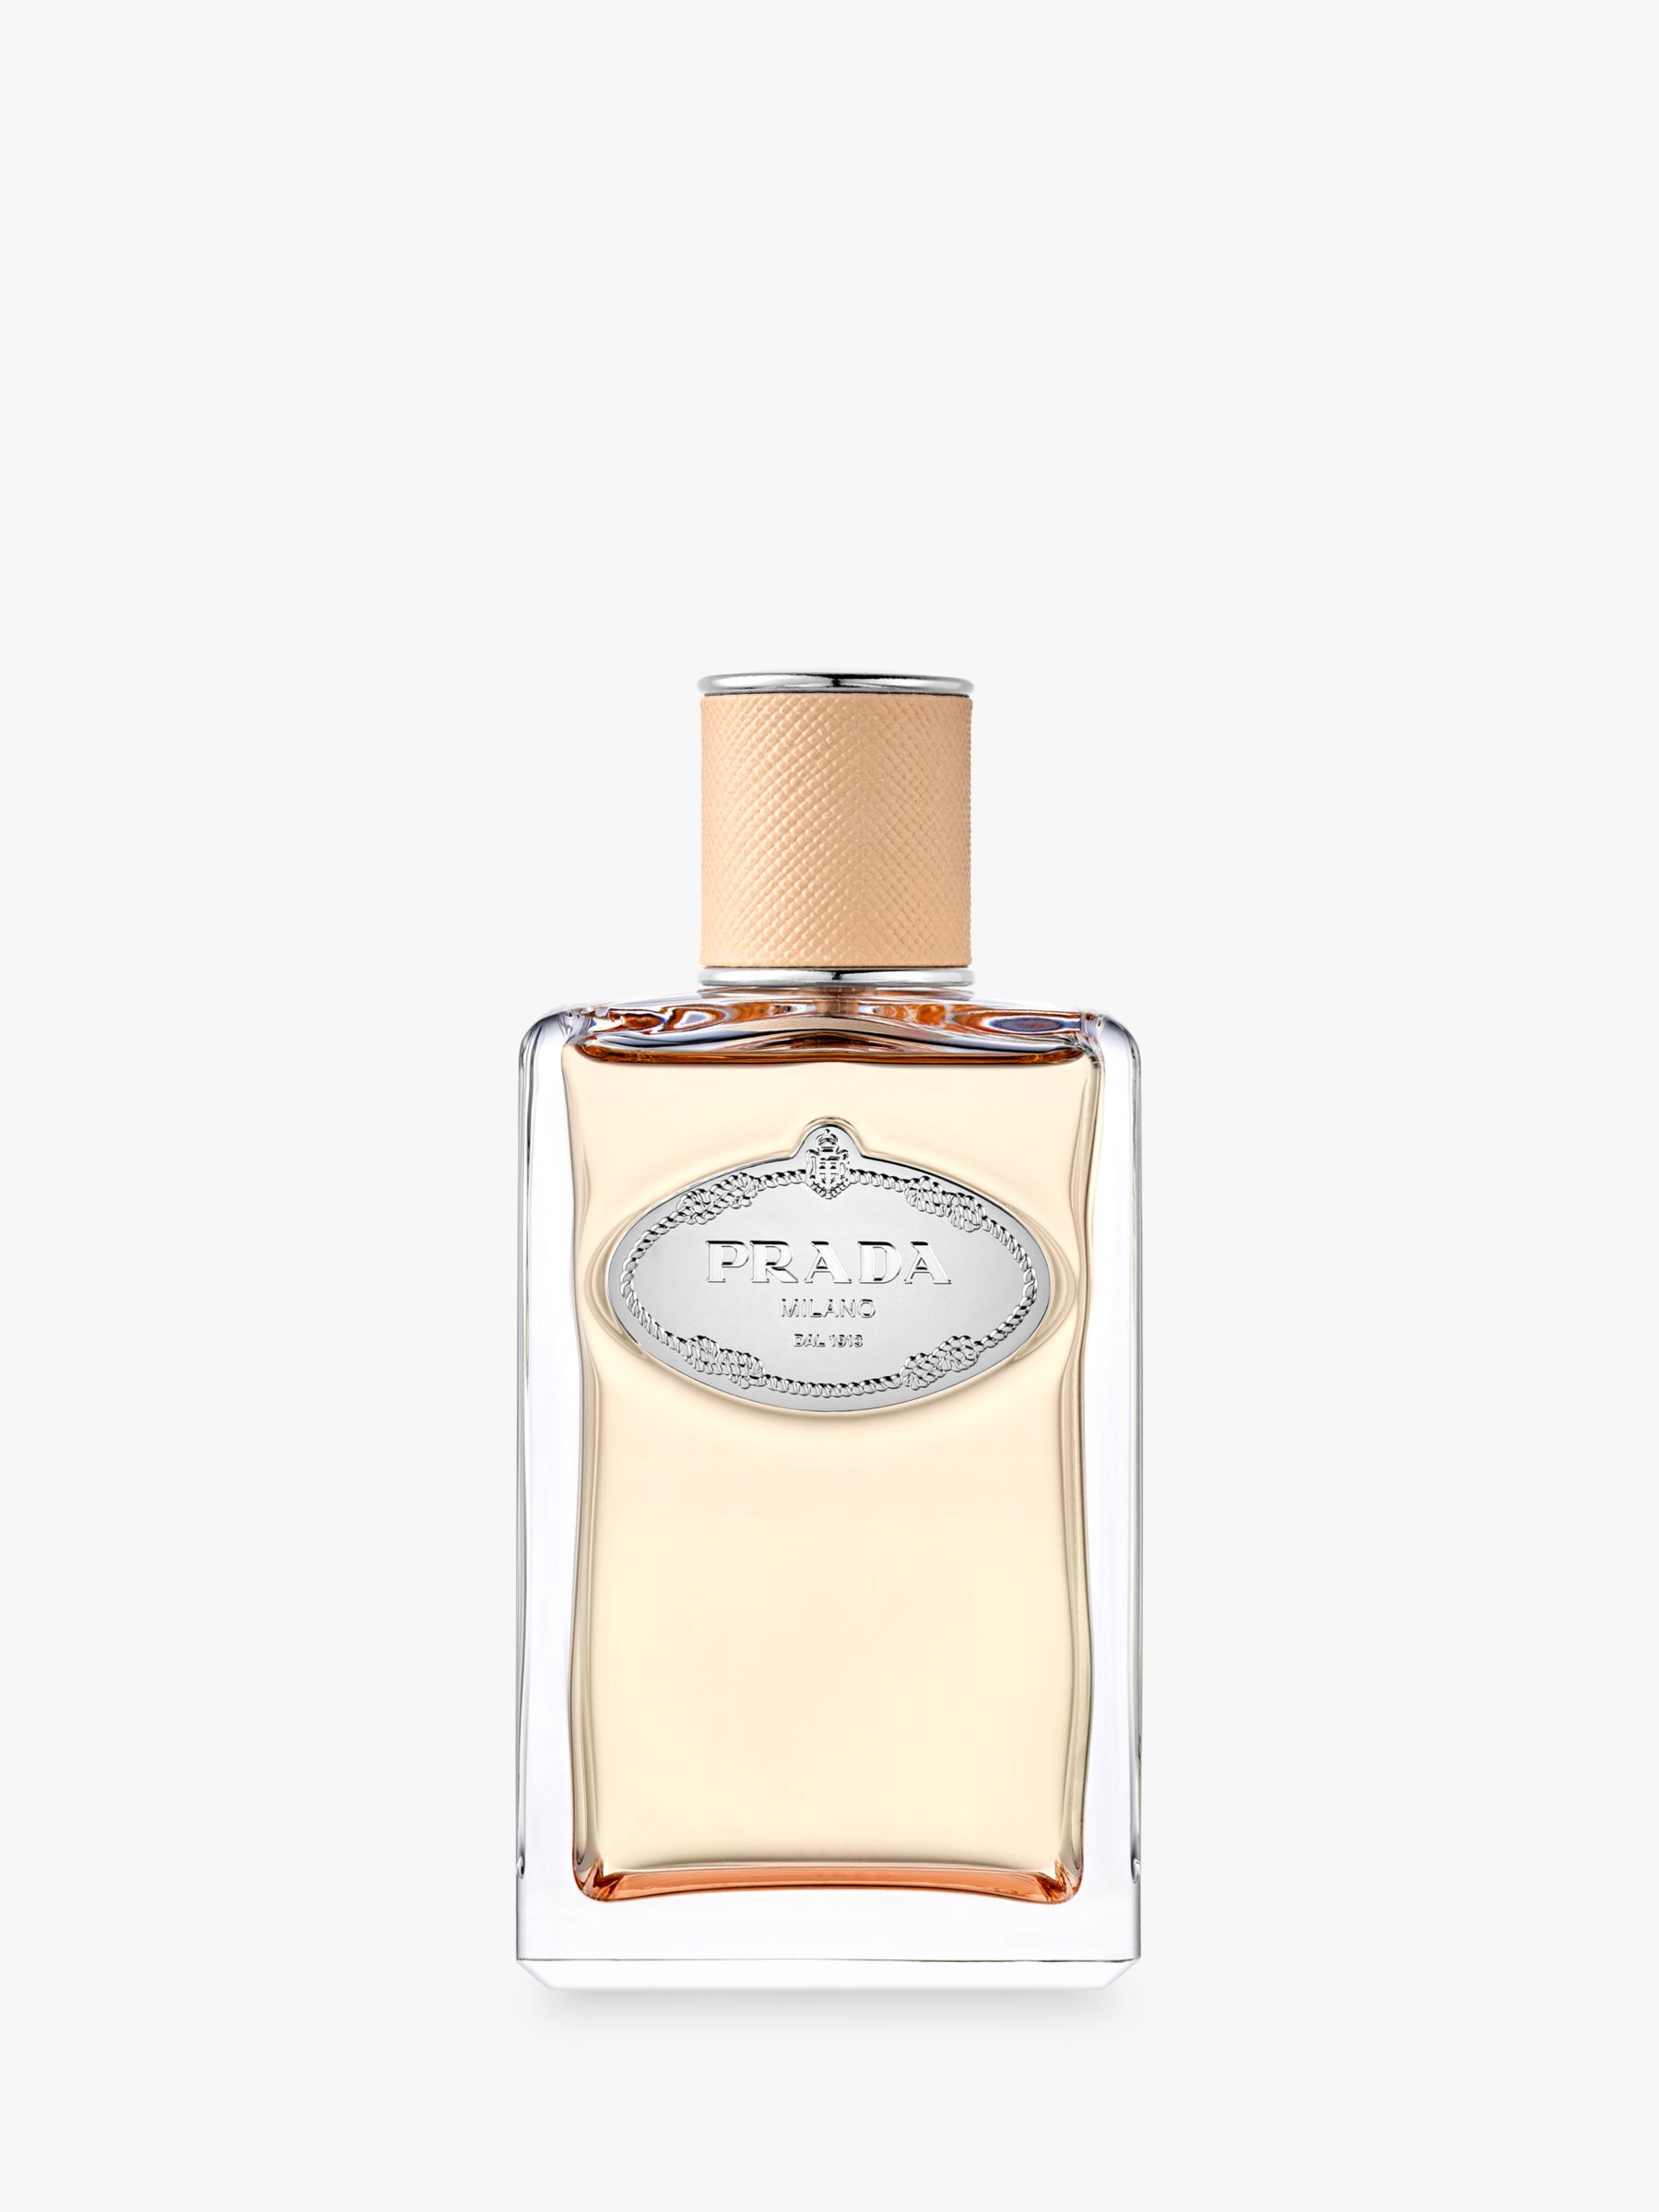 Prada Les Infusions de Prada Fleur D'Oranger Eau de Parfum, 100ml at John  Lewis & Partners